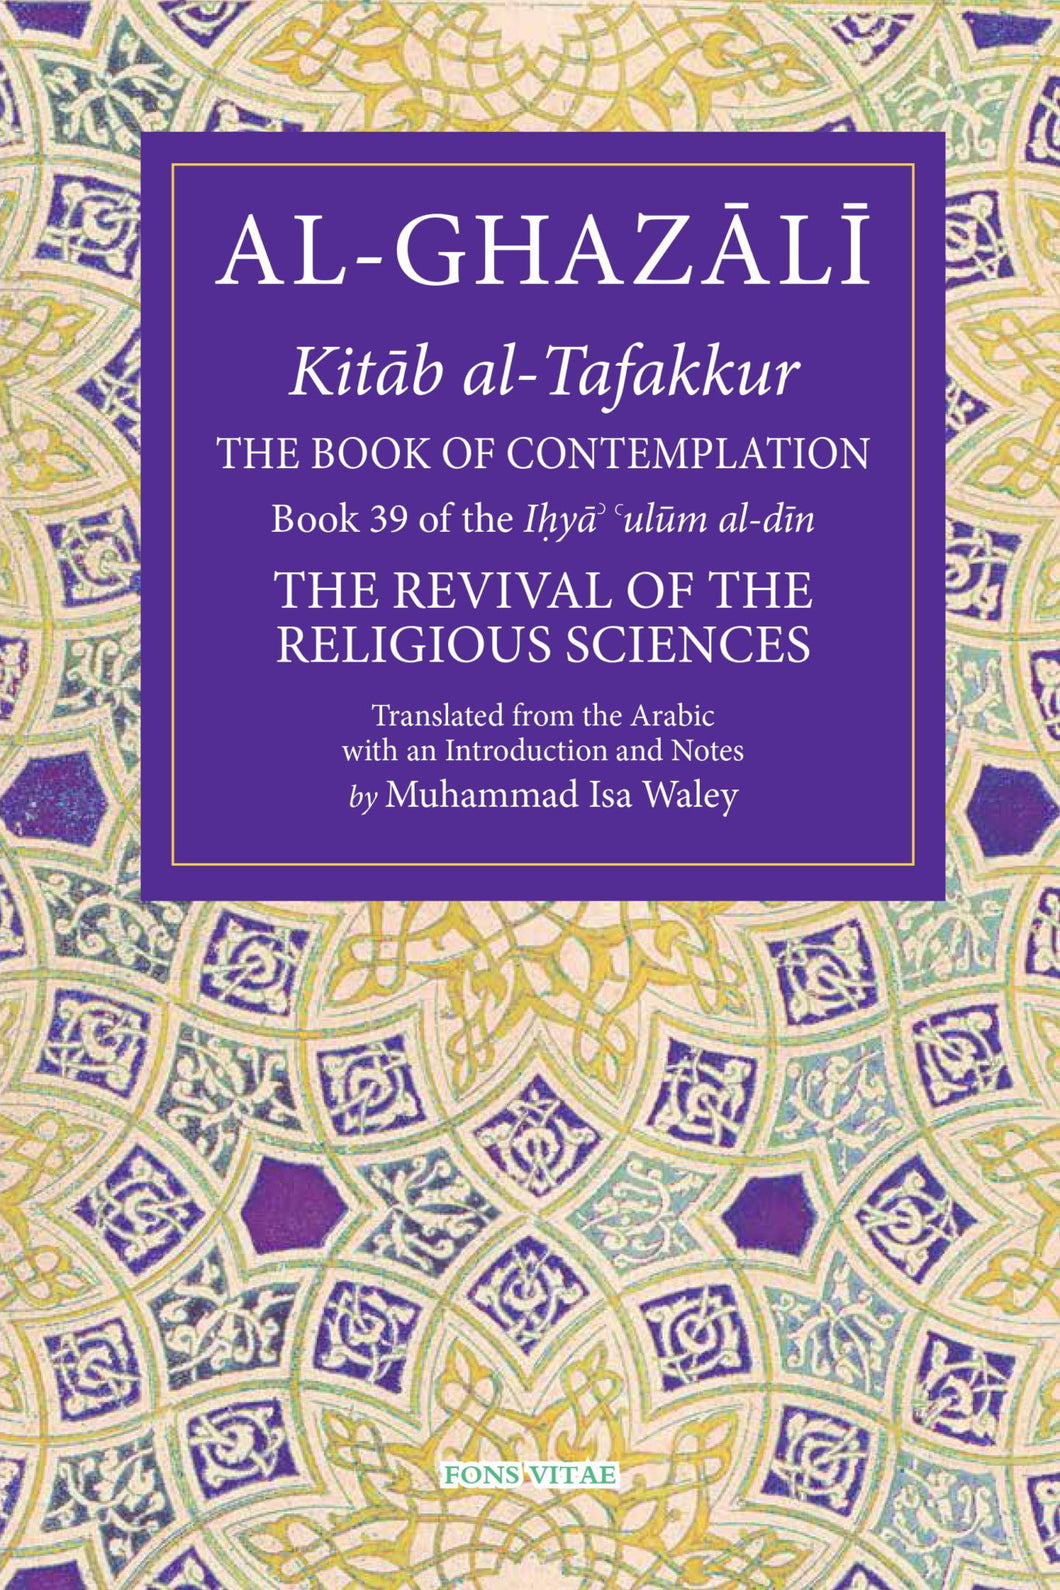 Al-Ghazali: The Book of Contemplation